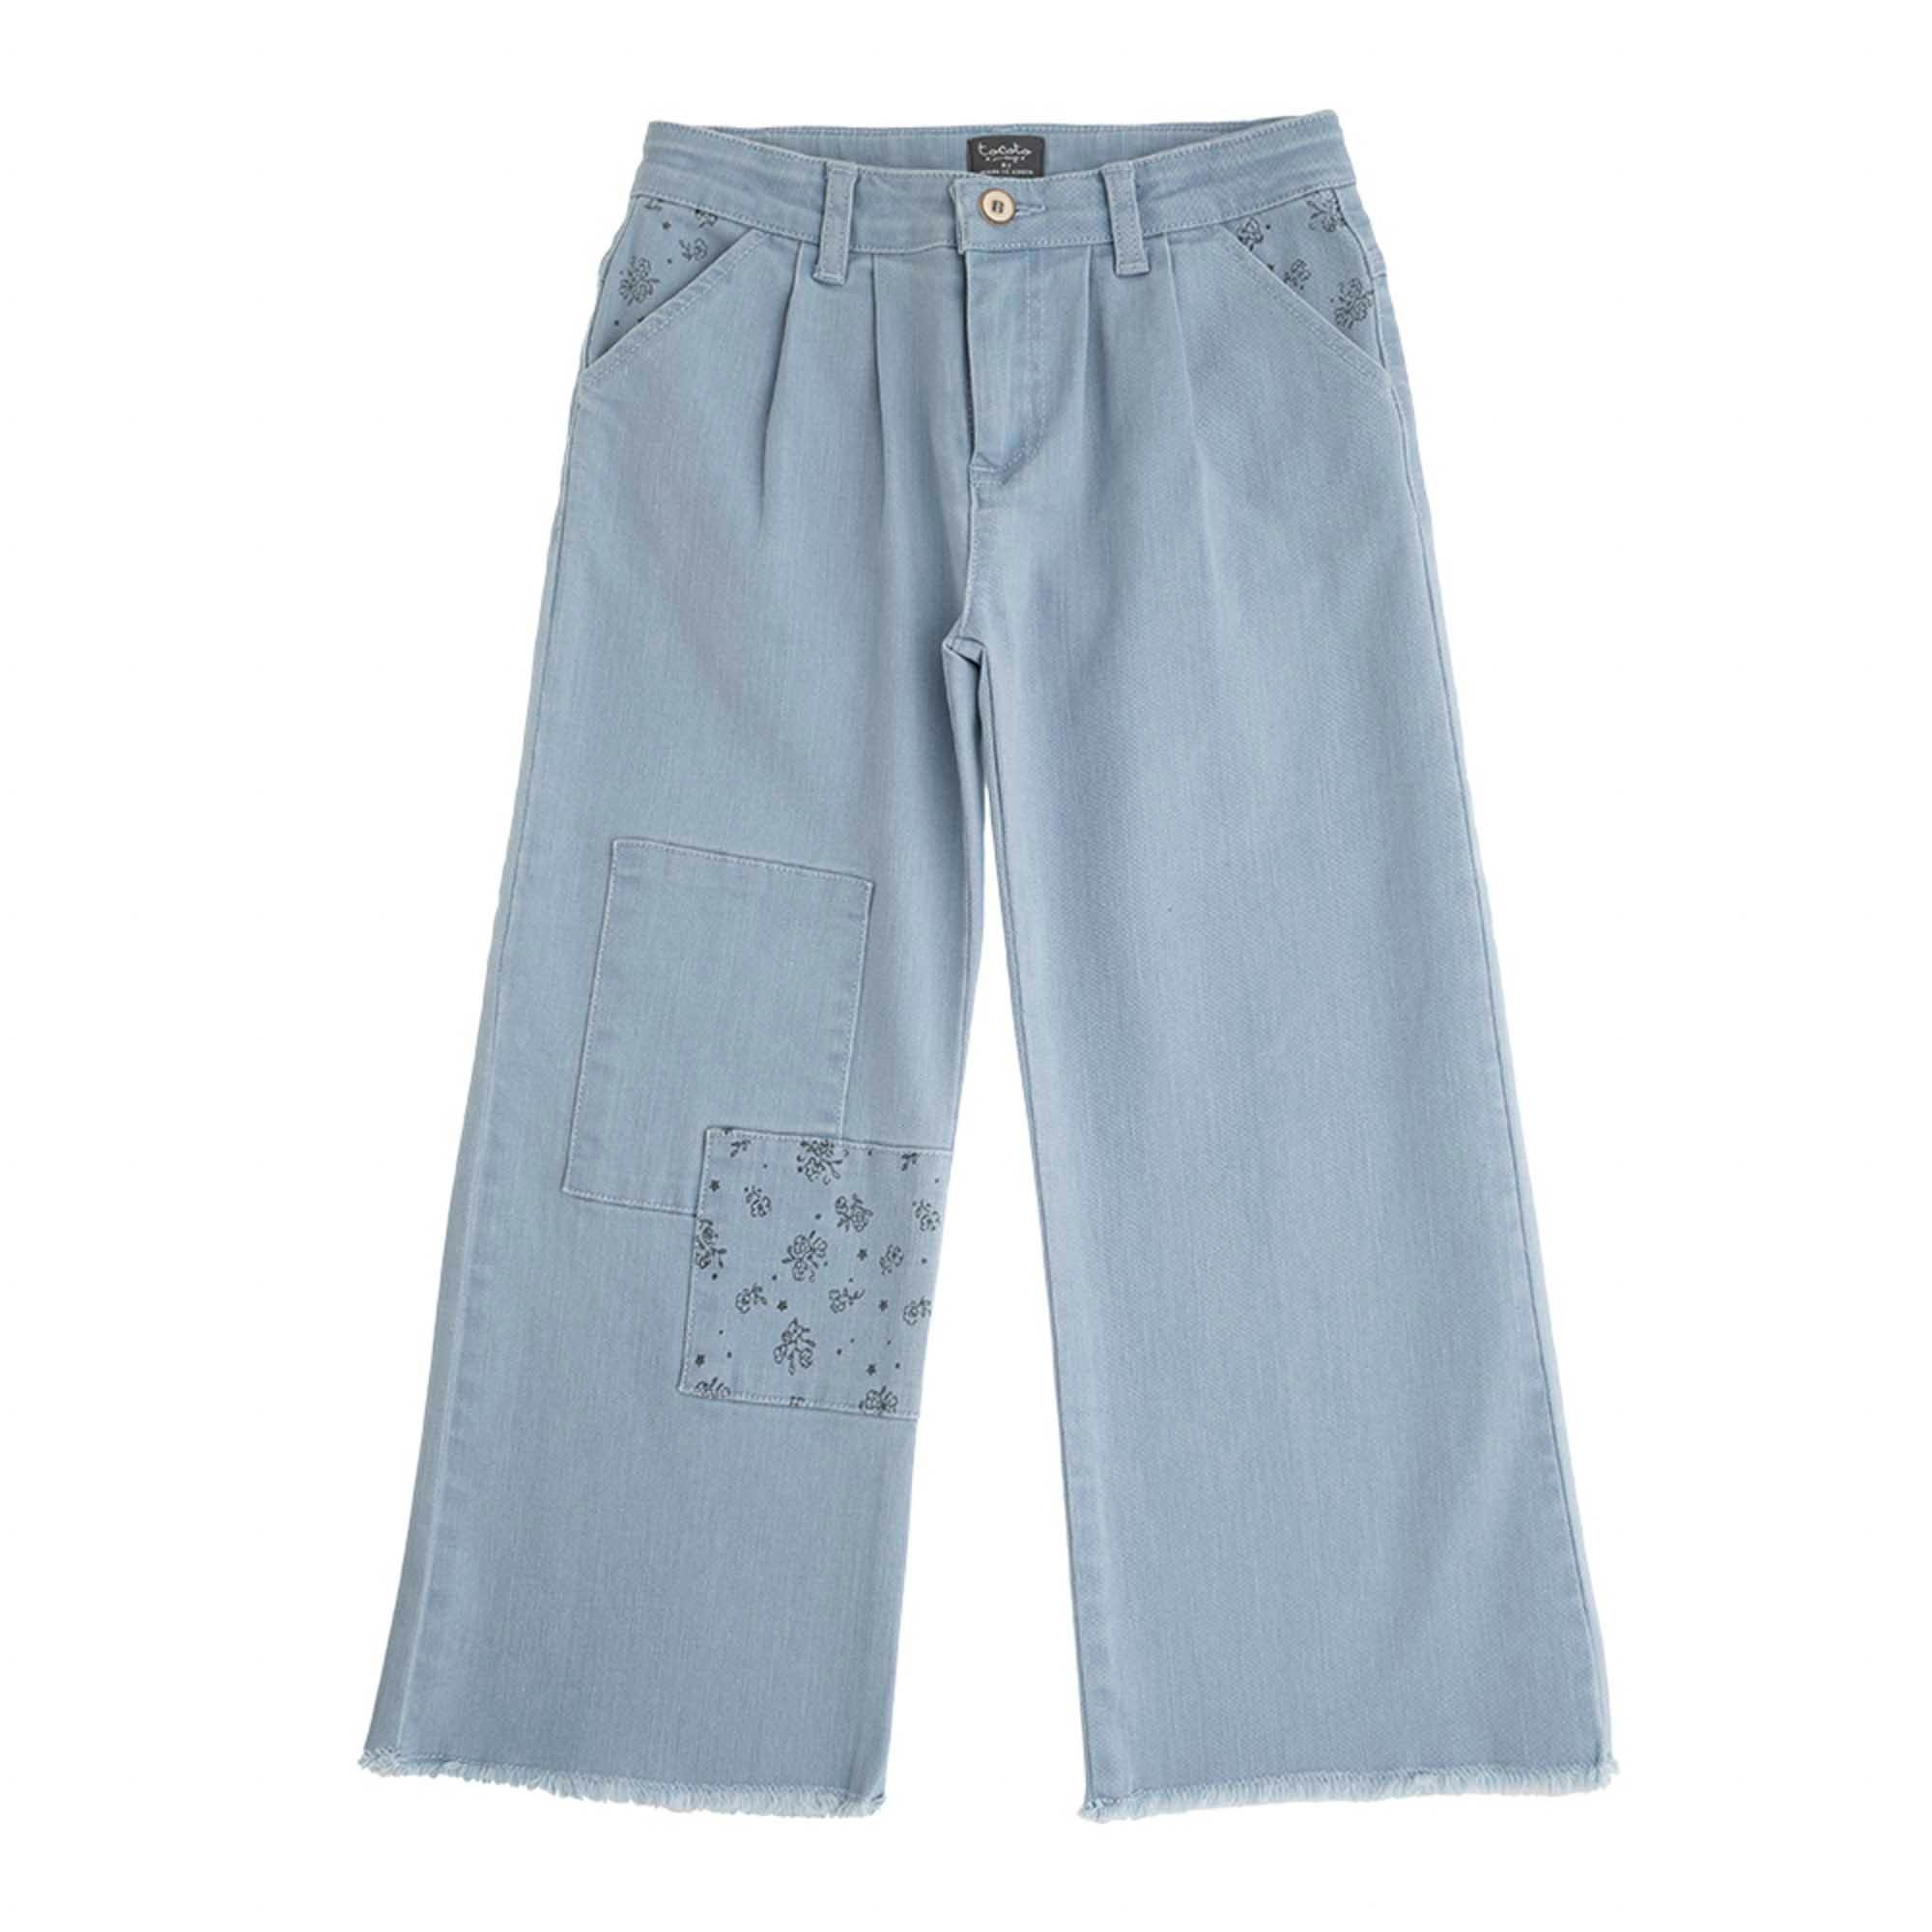 discount 70% KIDS FASHION Trousers Casual H&M jeans Blue 128                  EU 